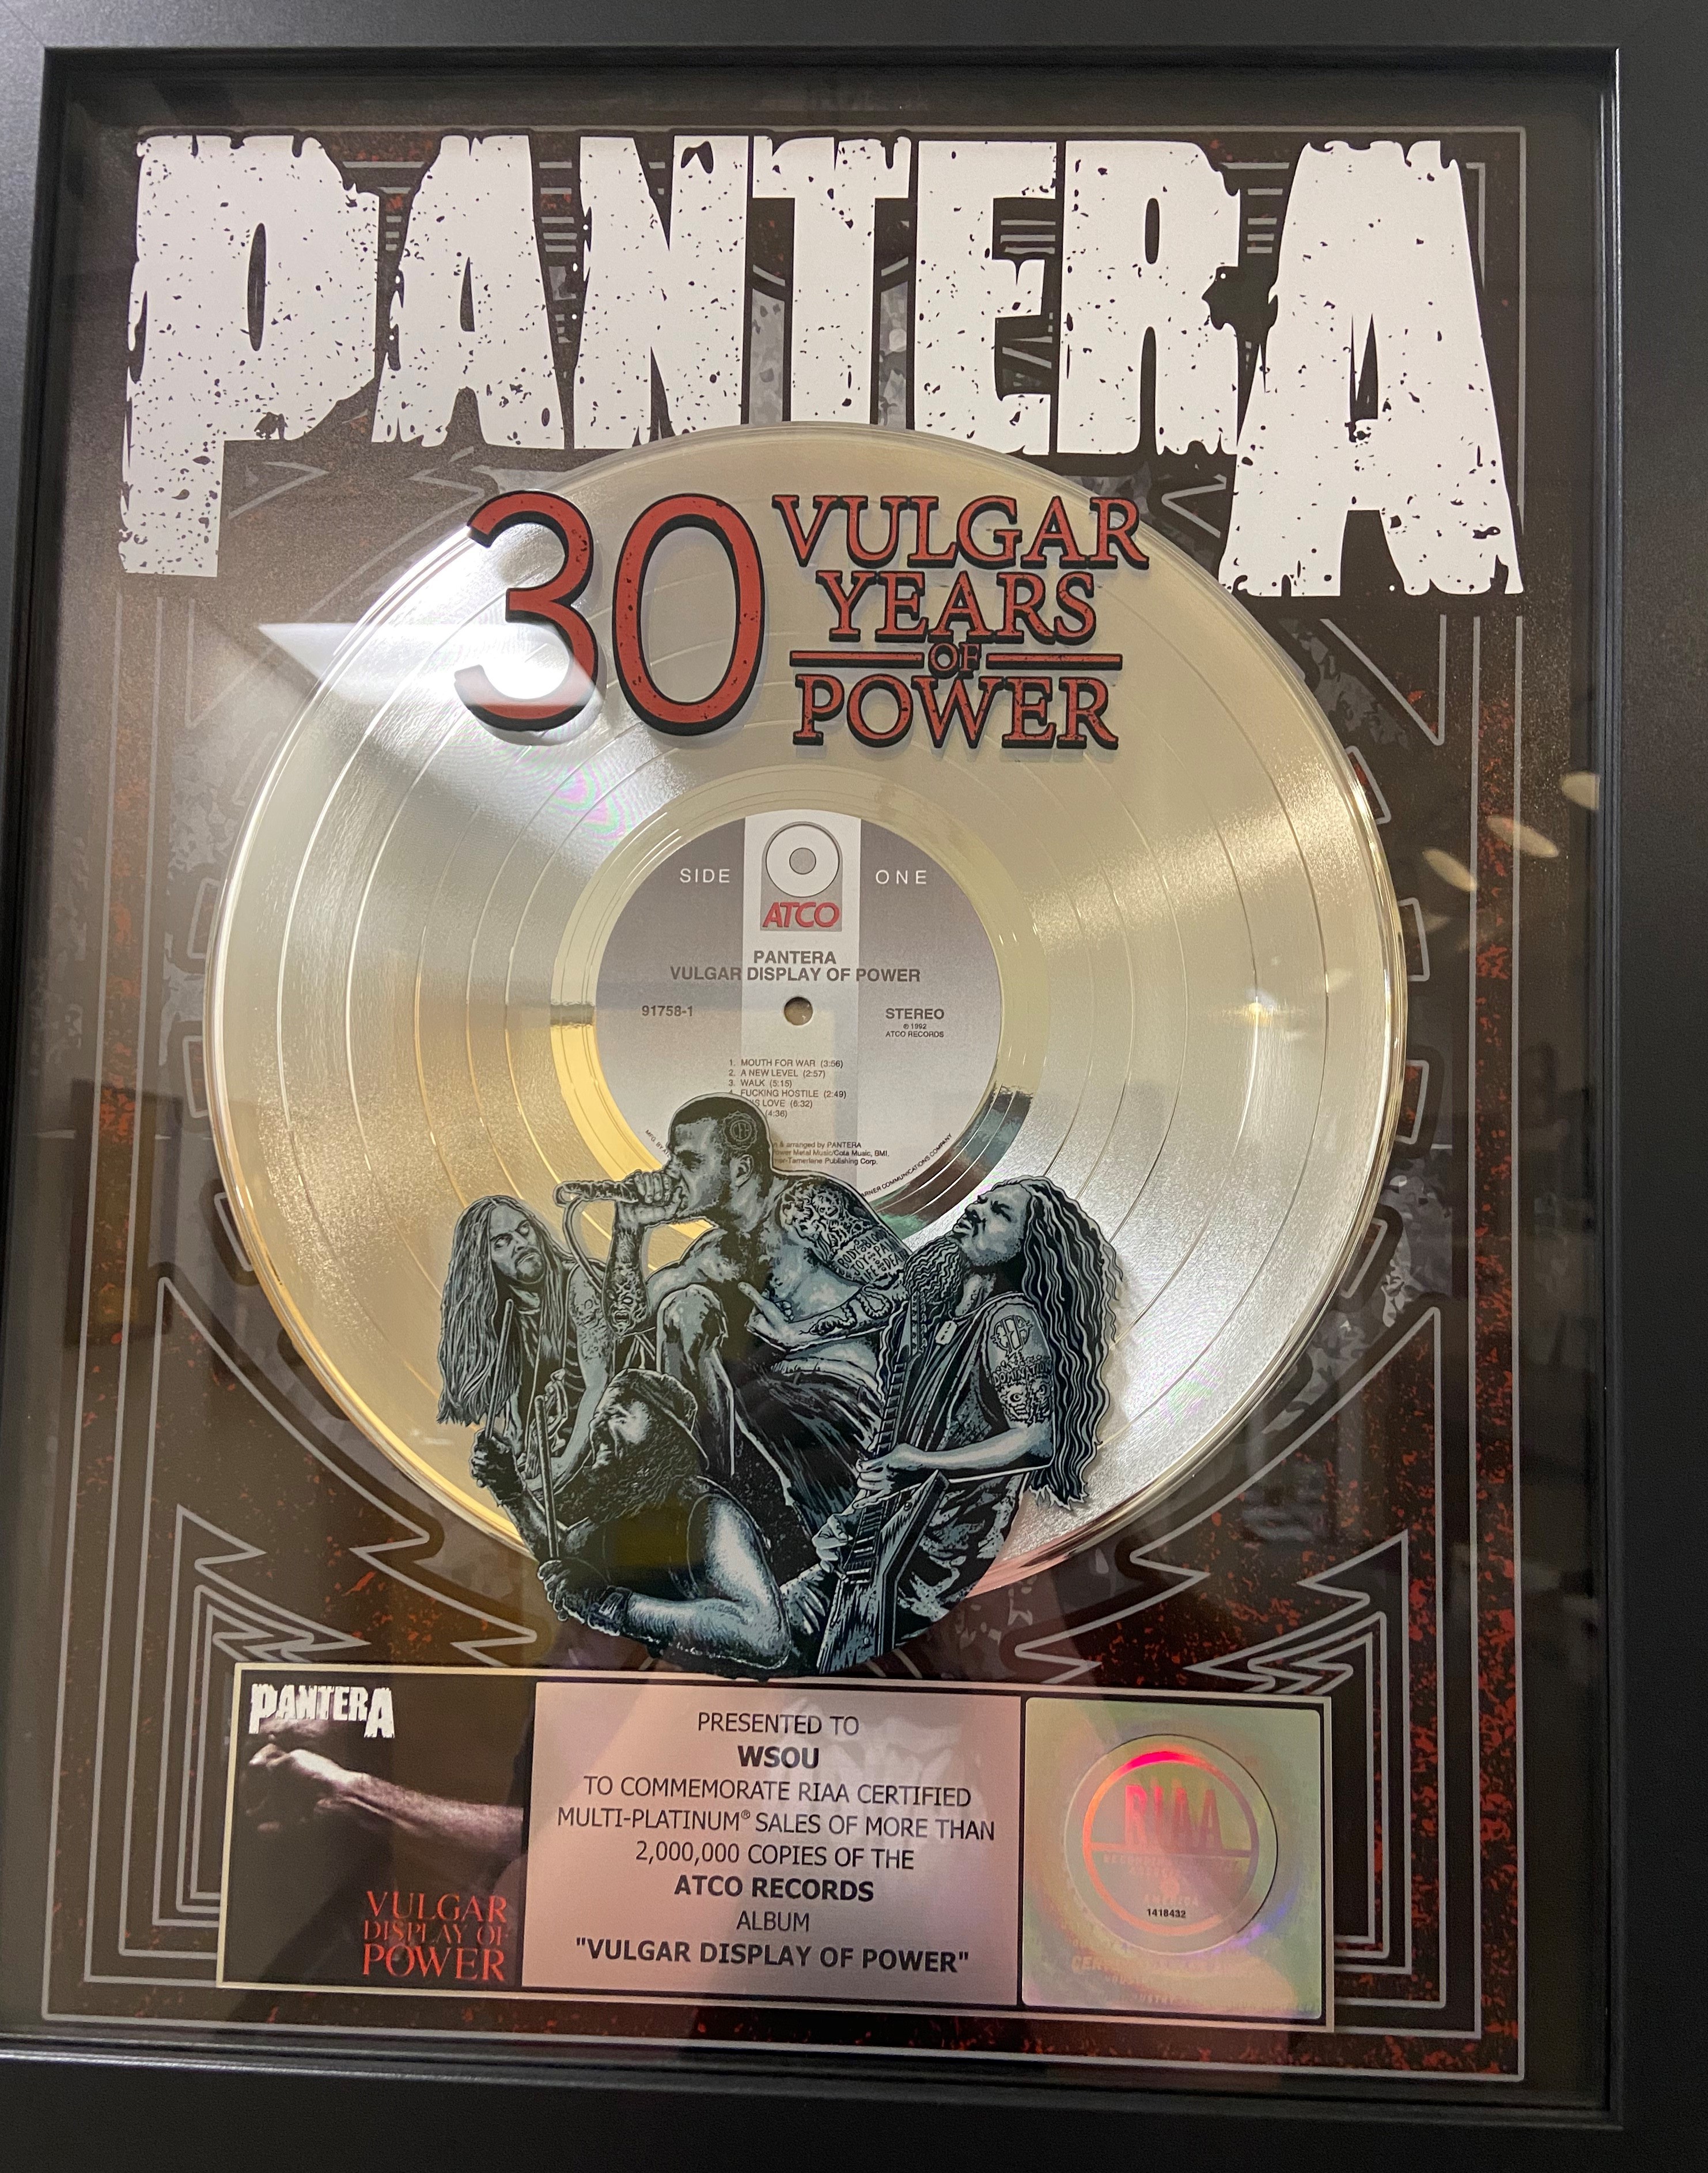 Pantera Album celebrating 30 years of Vulgar Display of Power